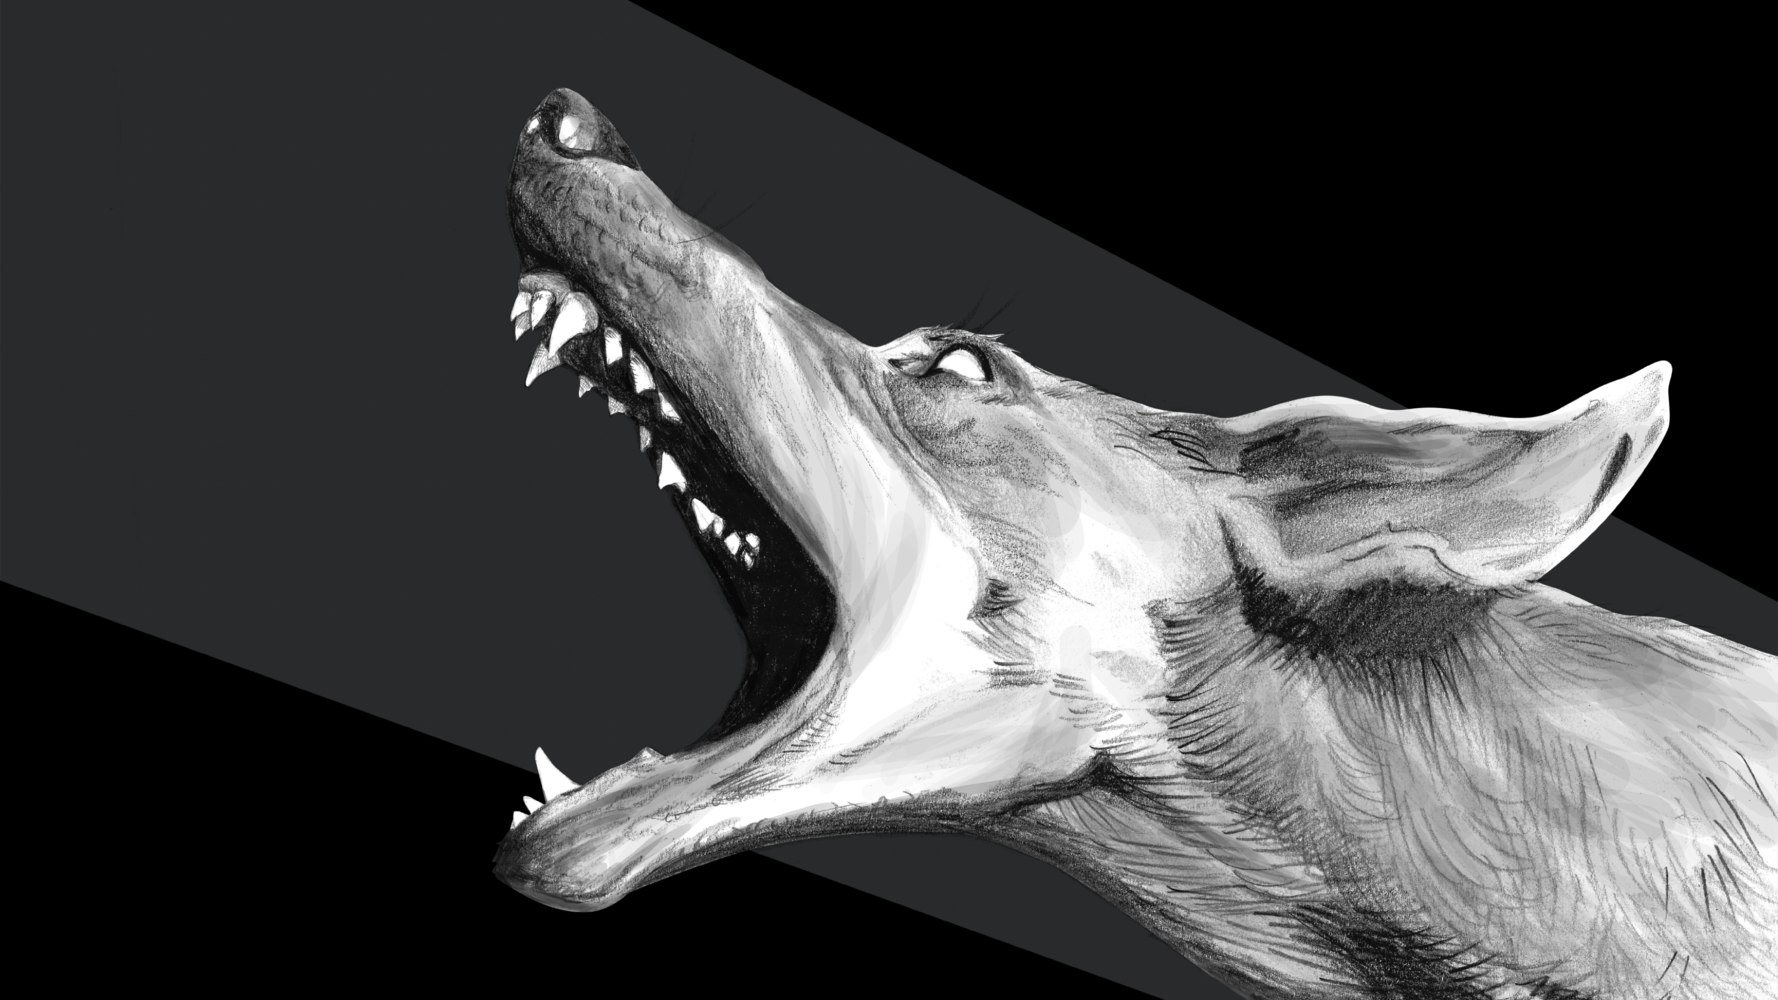 Wolf with sharp teeth, barking